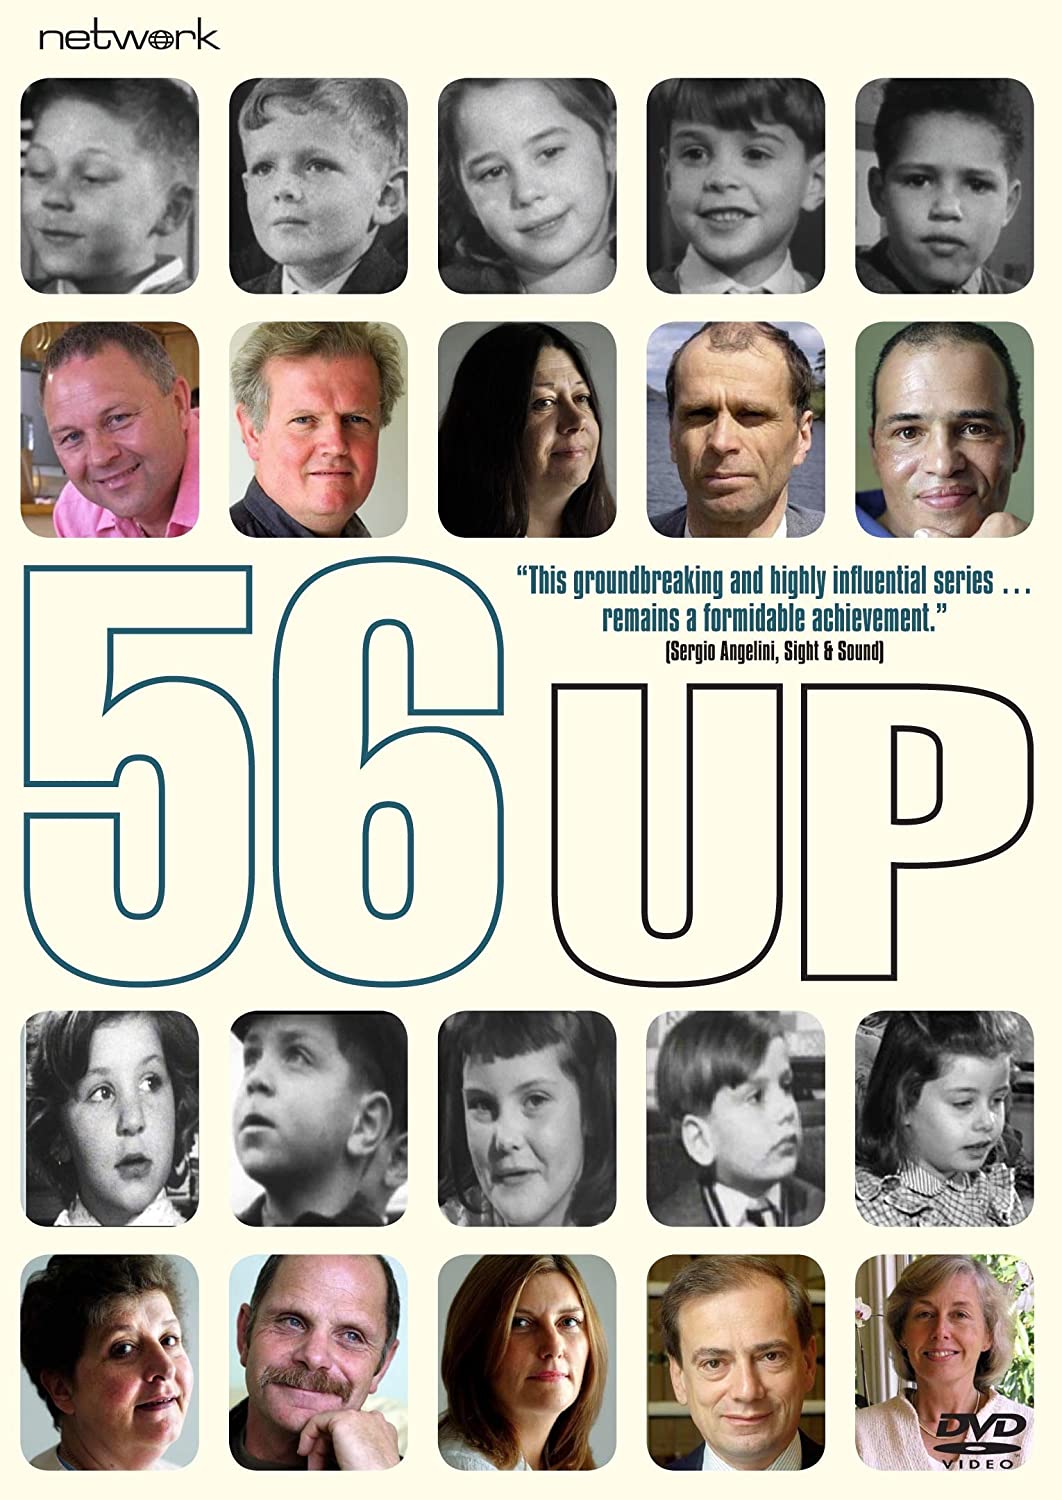 56 Up - Documentary [DVD]